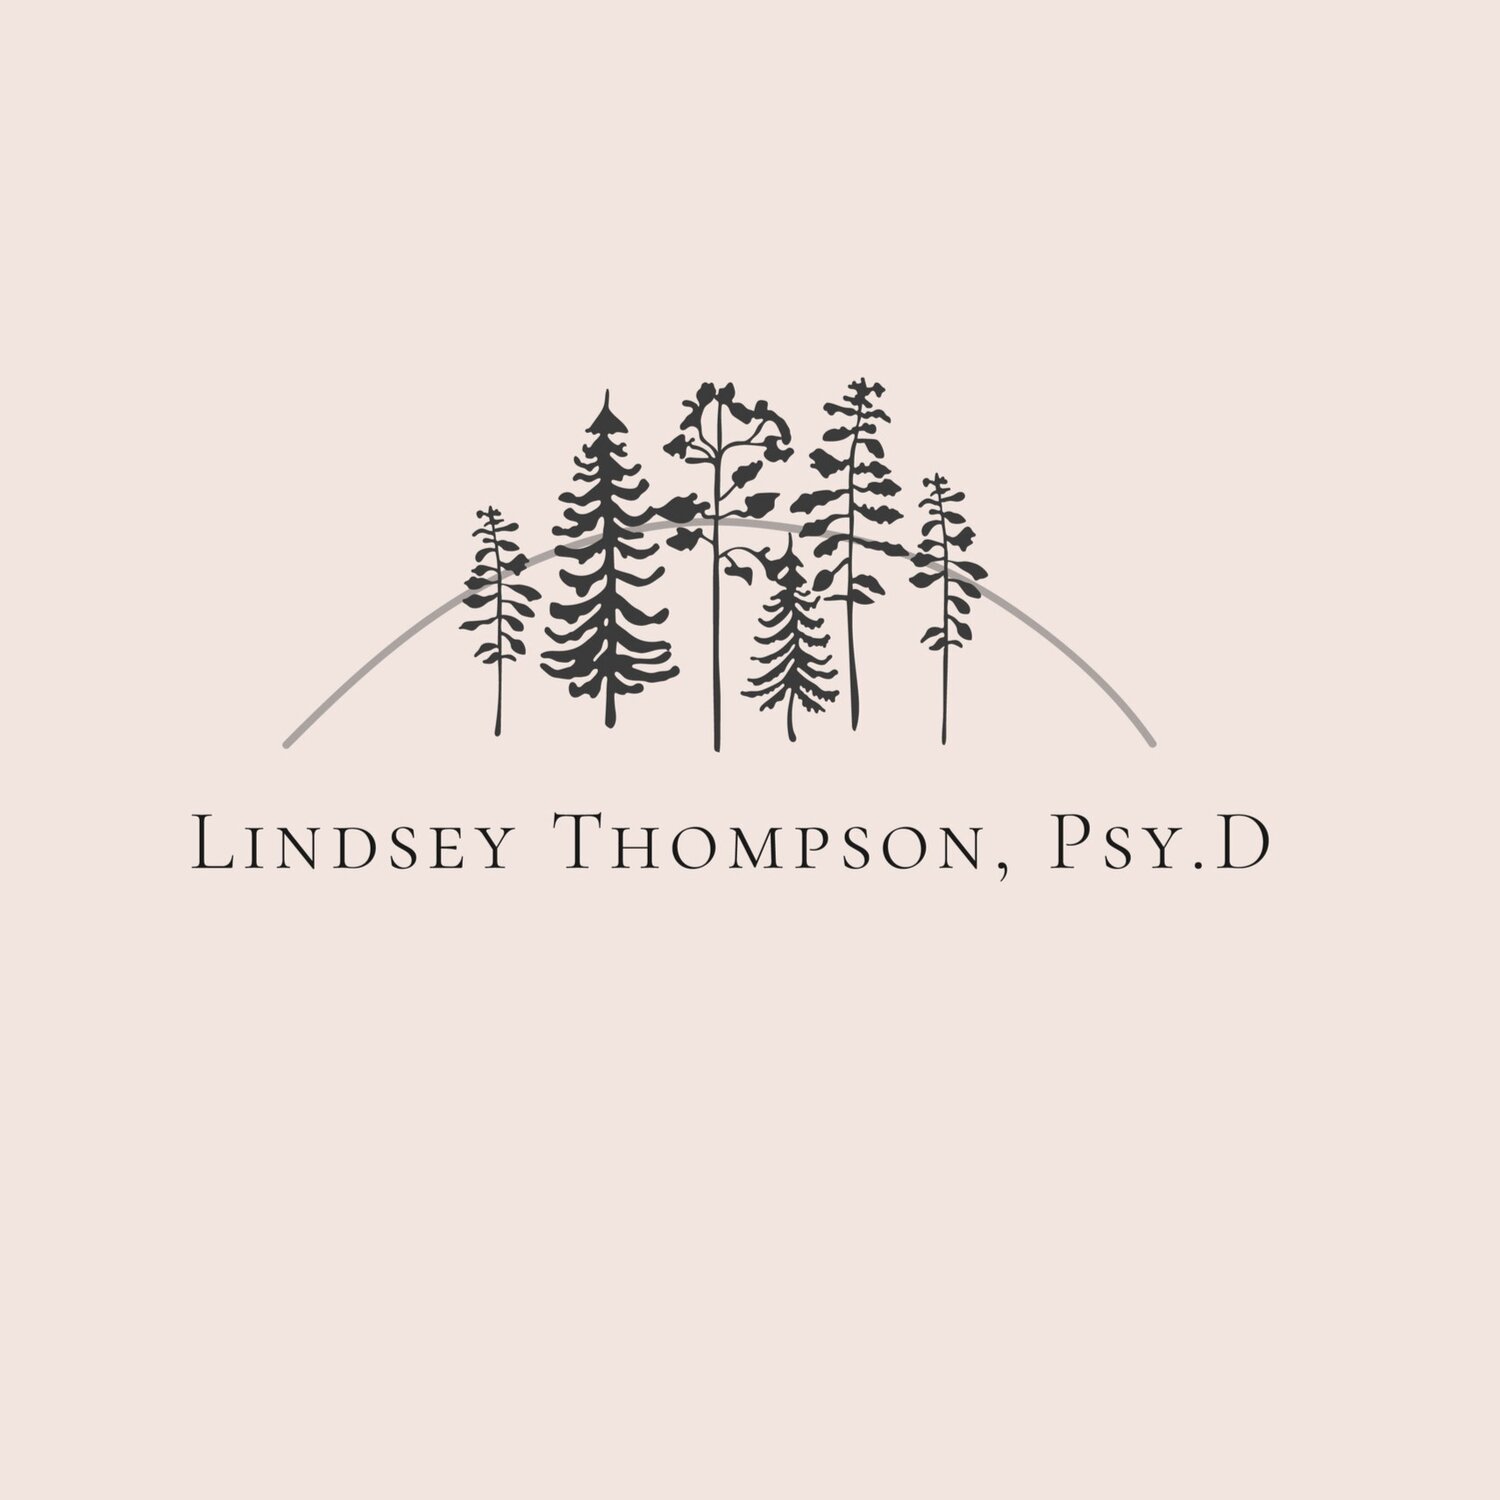 Lindsey Thompson, Psy.D